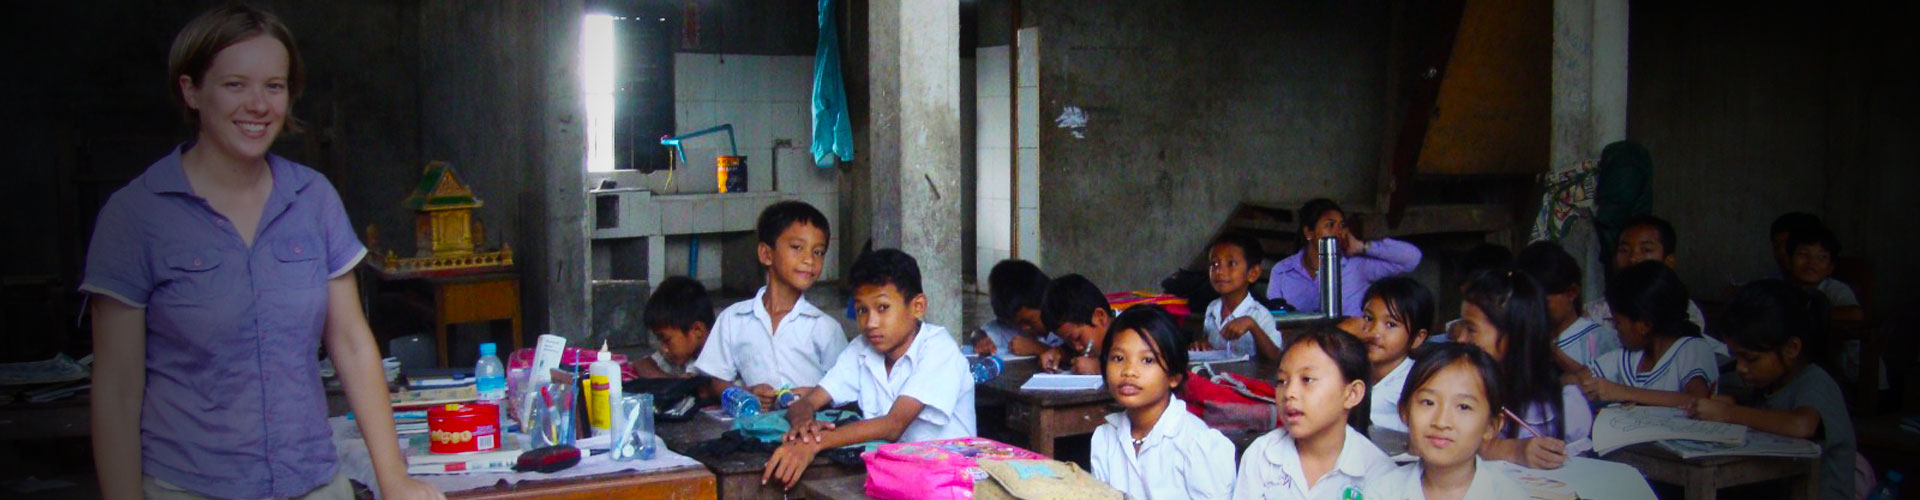 Volunteer Teaching English Program in Cambodia